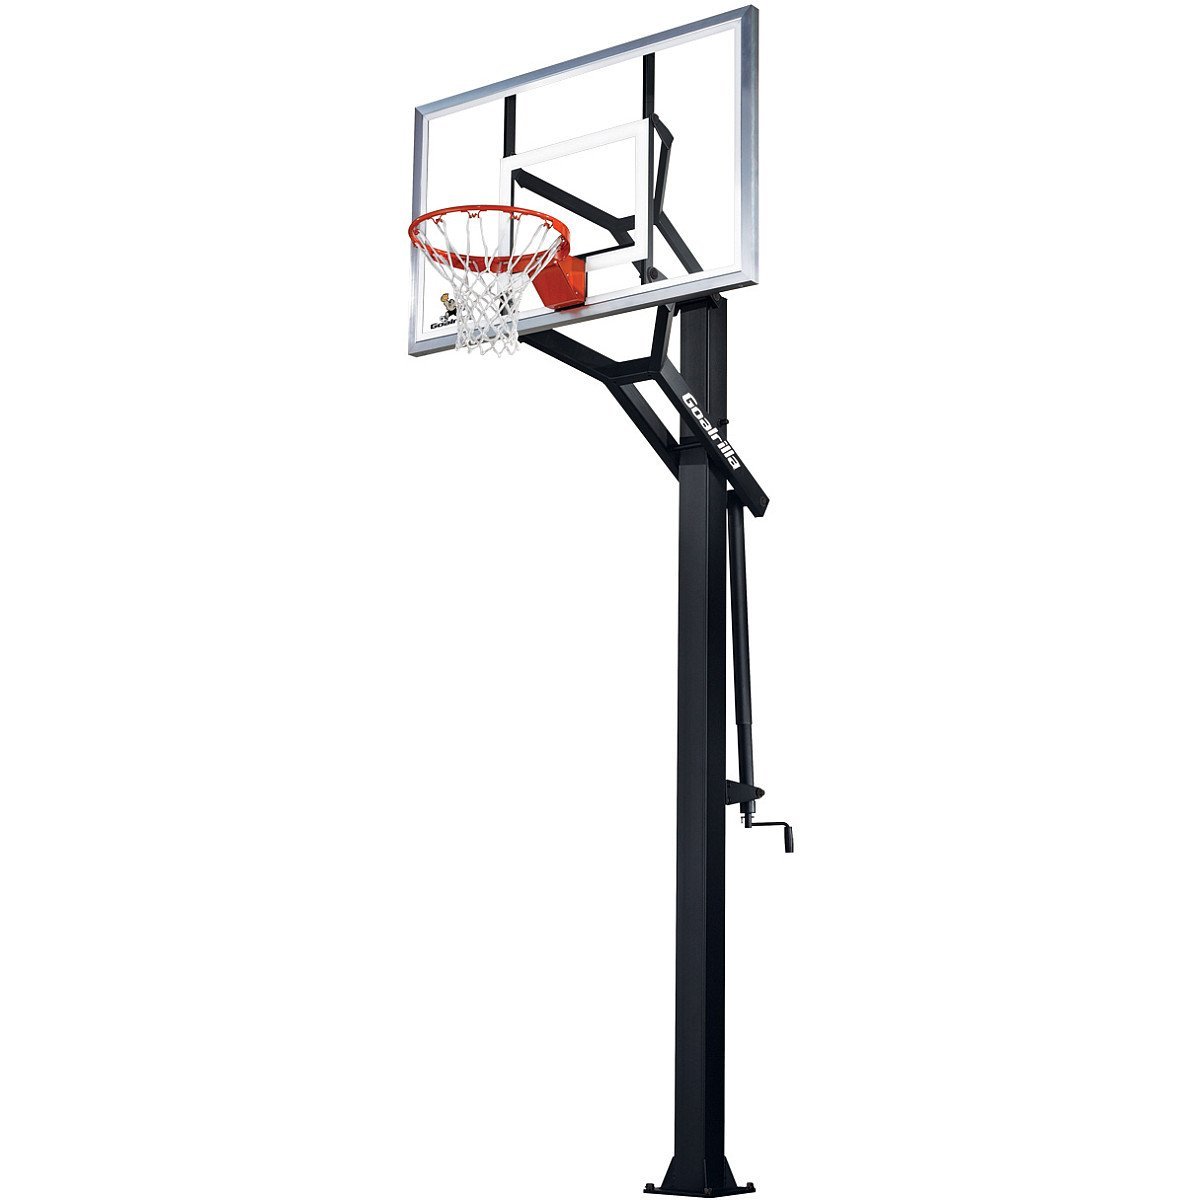 Amazon.com : Goalrilla GLR GS 54 Basketball System : In Ground ...